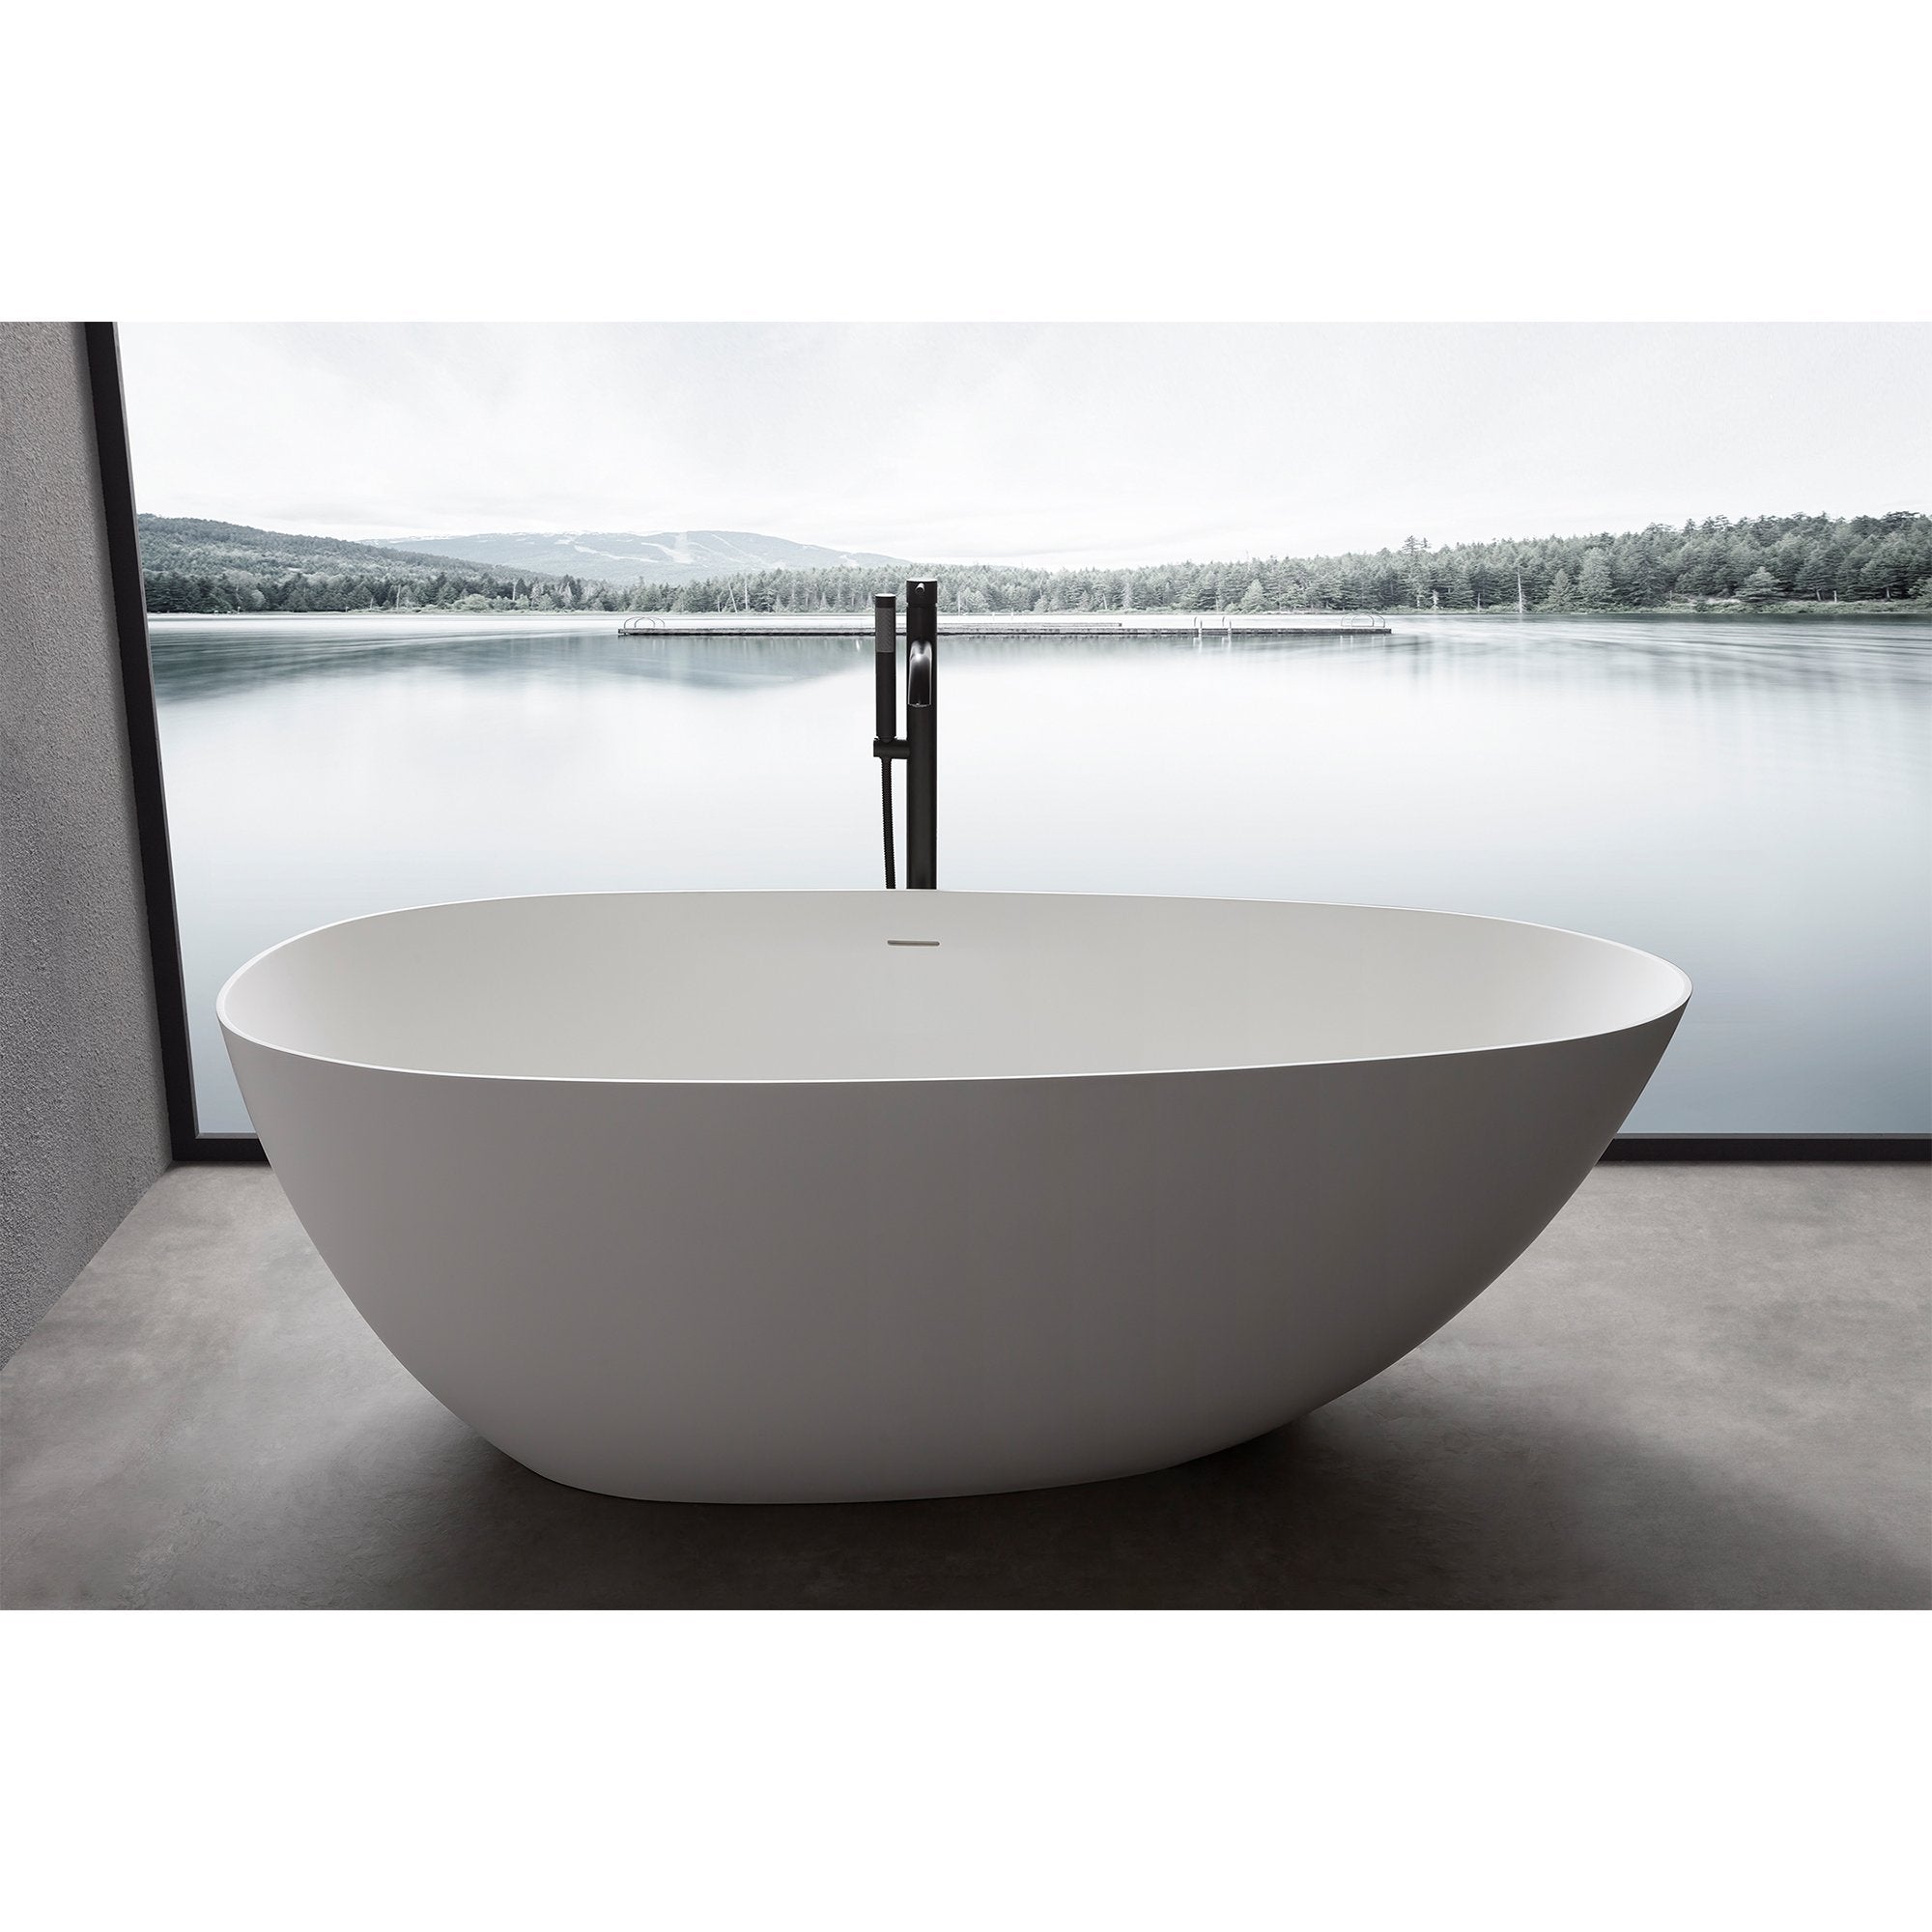 1800mm Bathroom bathtub soaking tub stone bathtub for adult freestanding bathtub